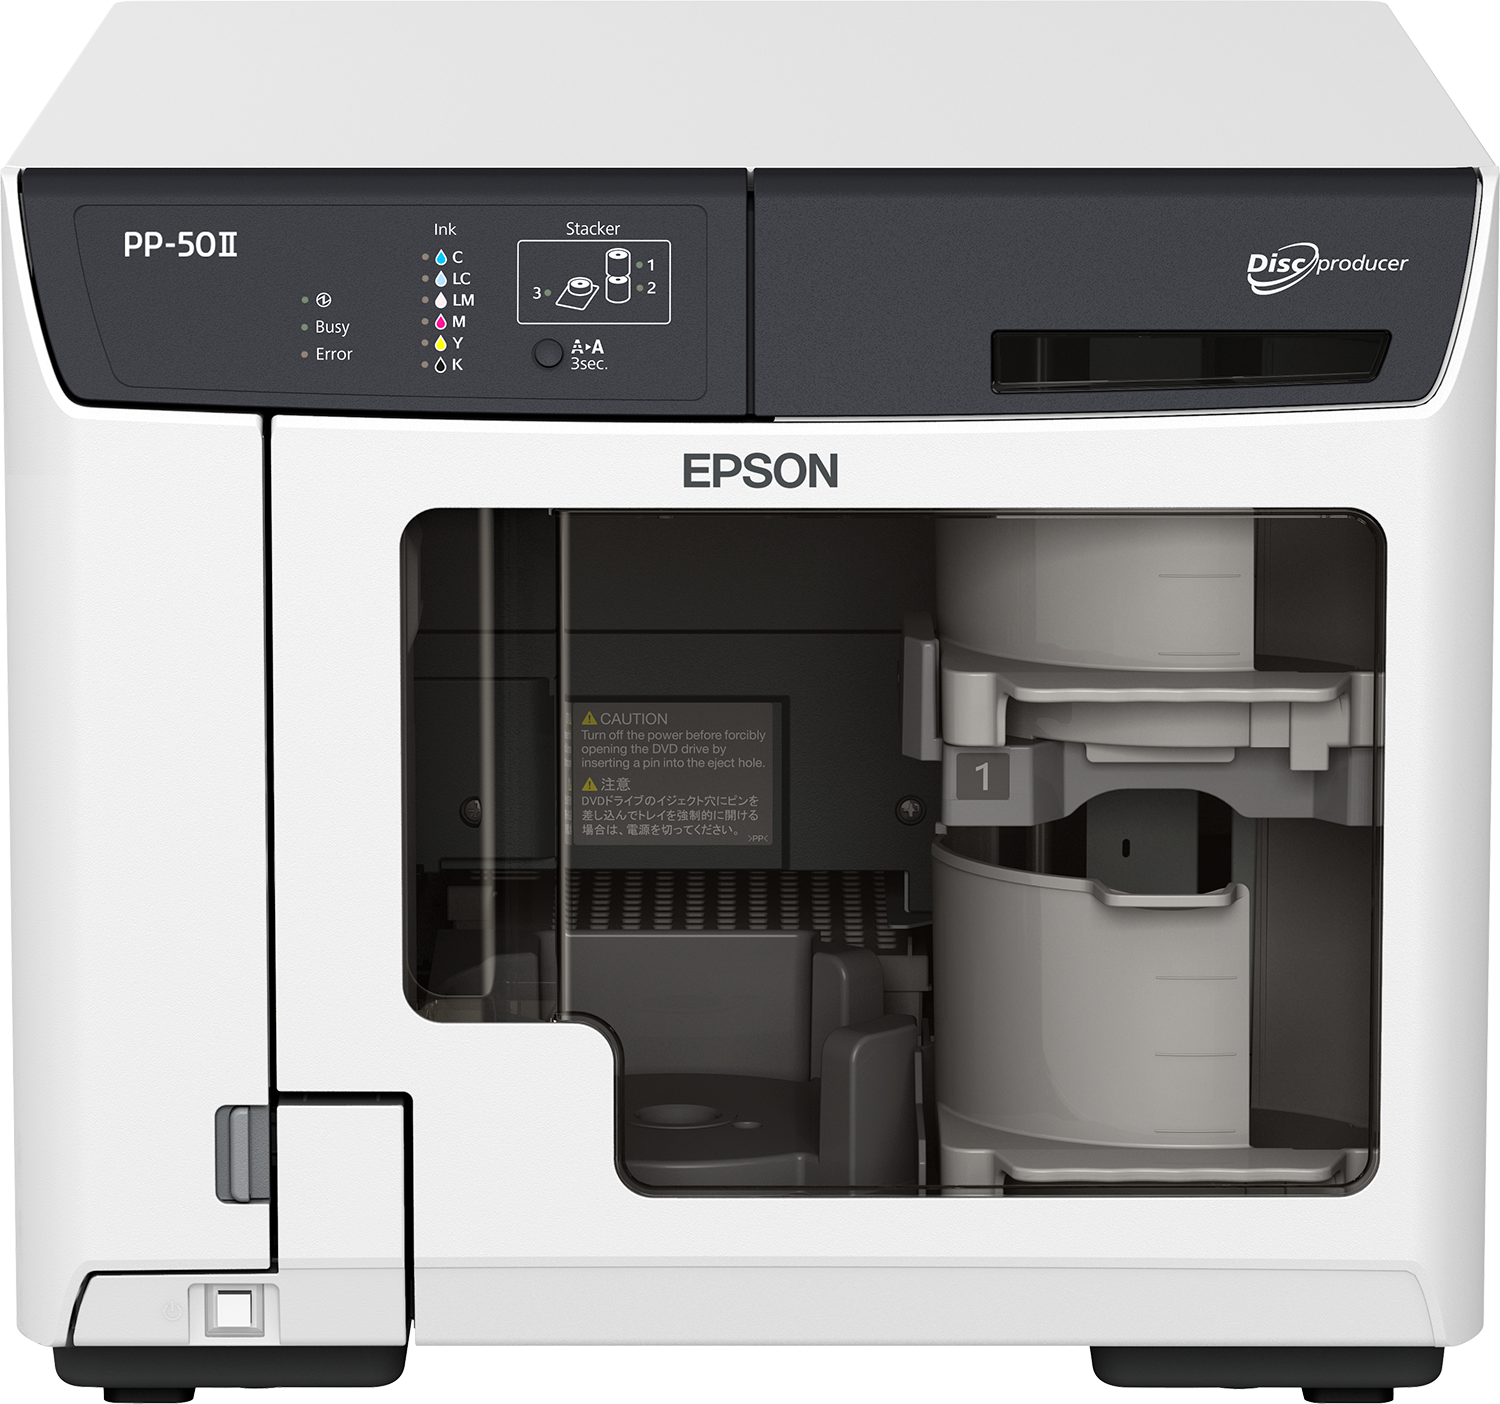 Epson Discproducer PP-50II Large Image